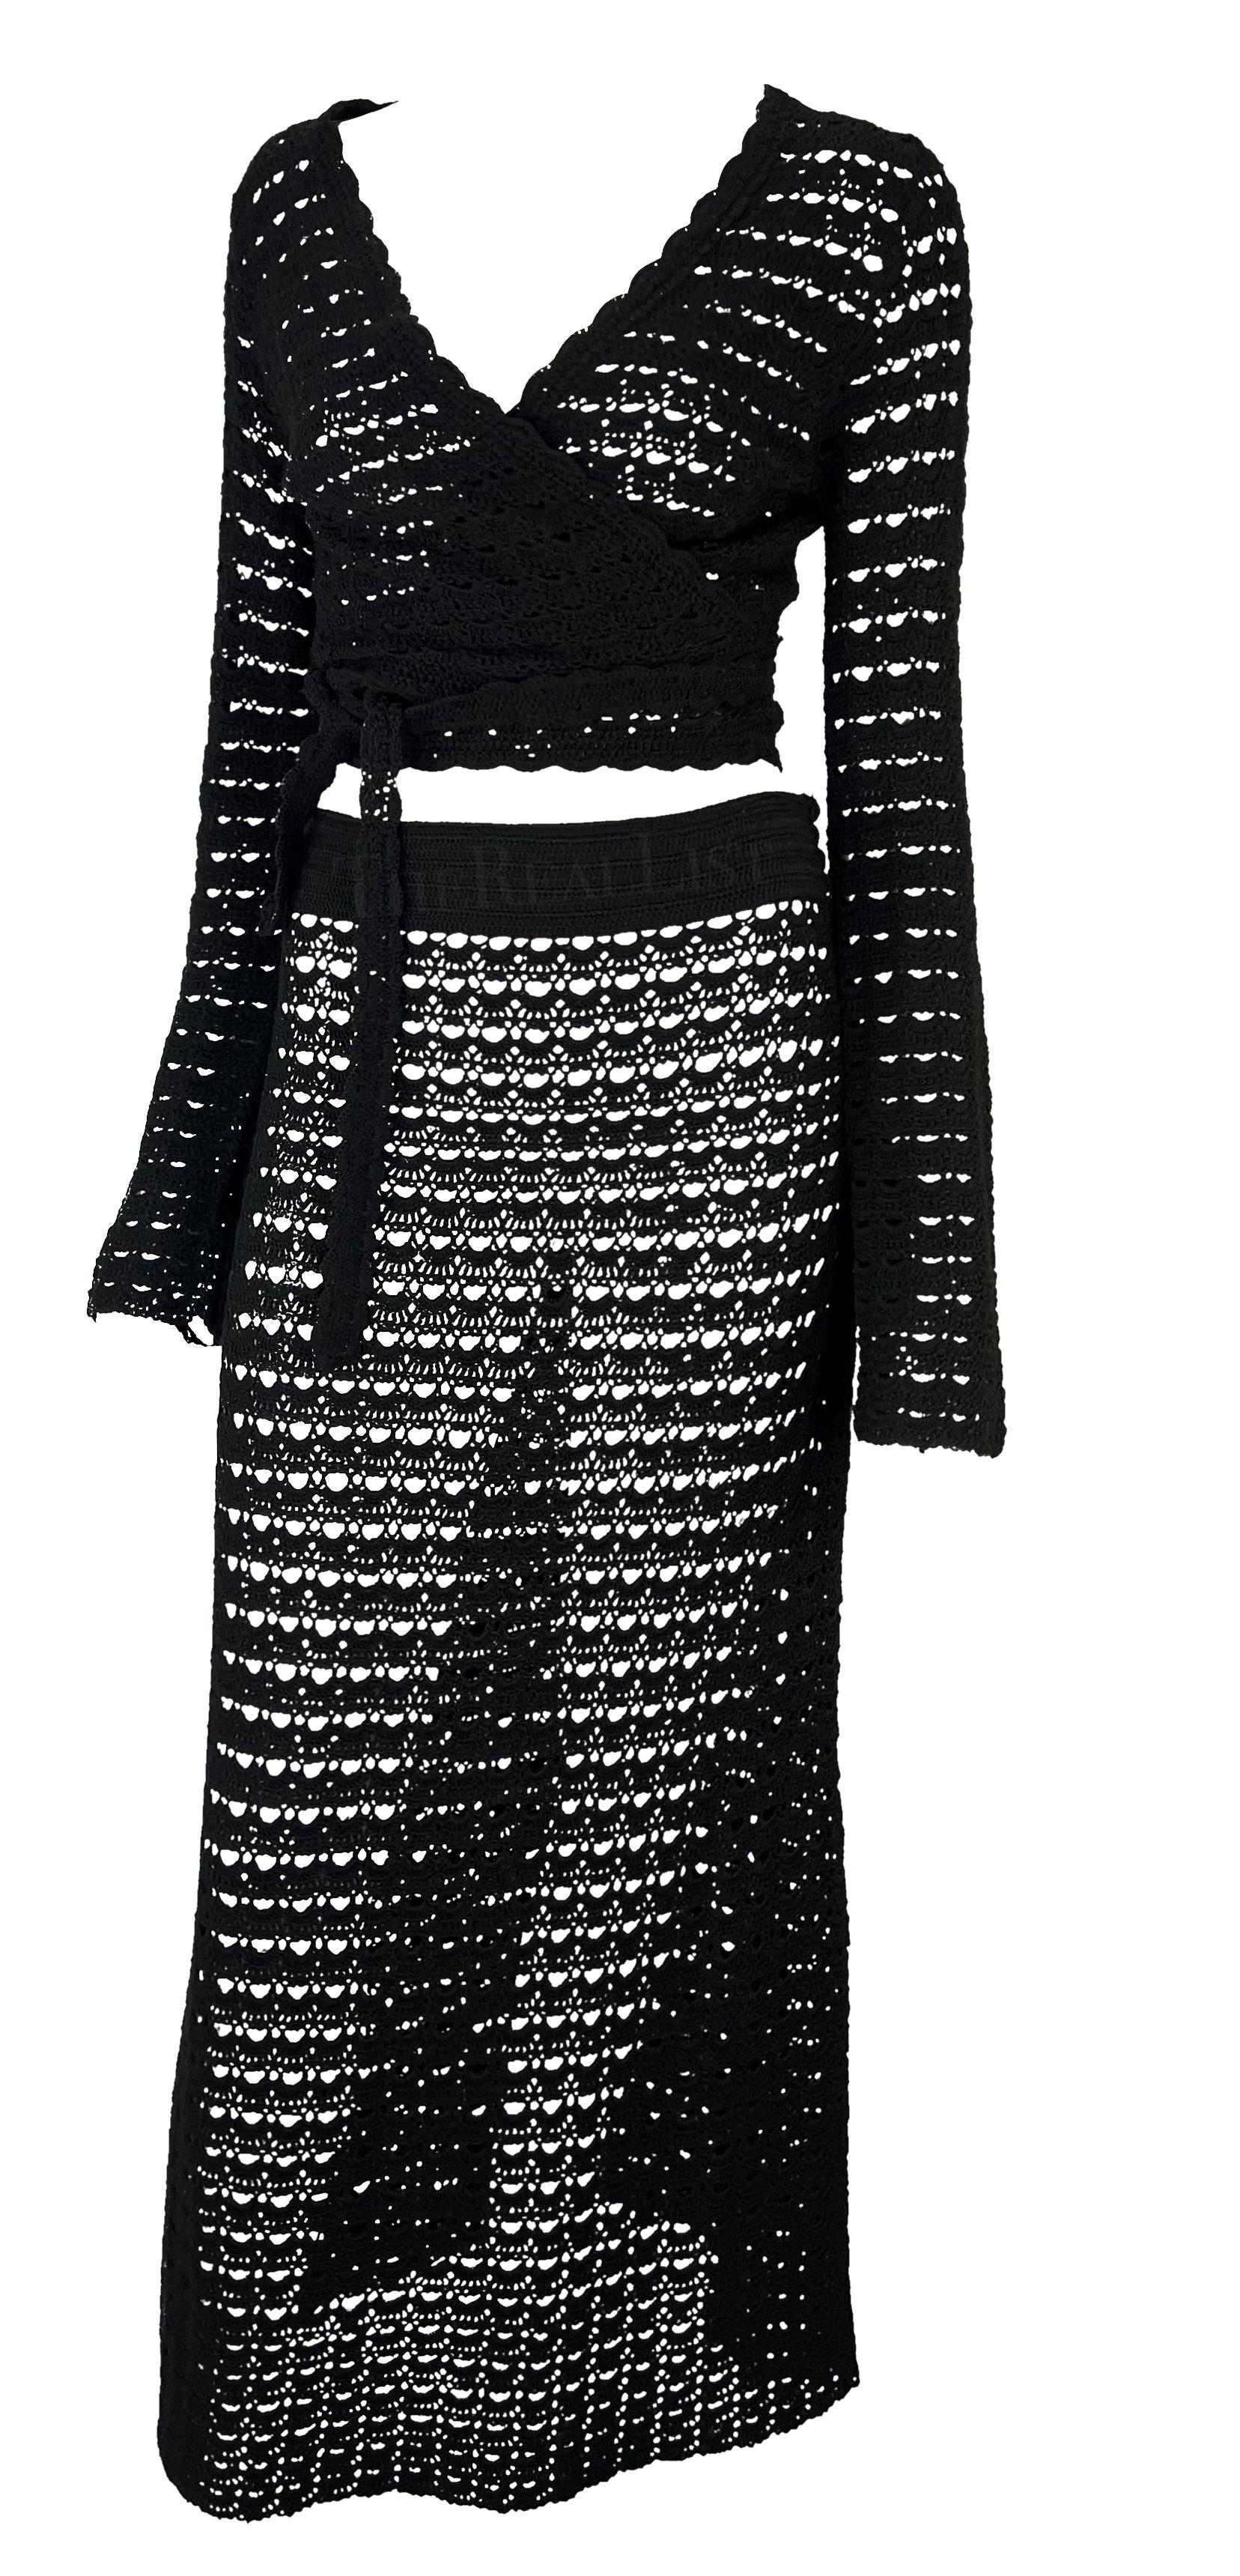 S/S 1997 Dolce & Gabbana Black Knit Crochet Maxi Skirt Wrap Top Skirt Set For Sale 1